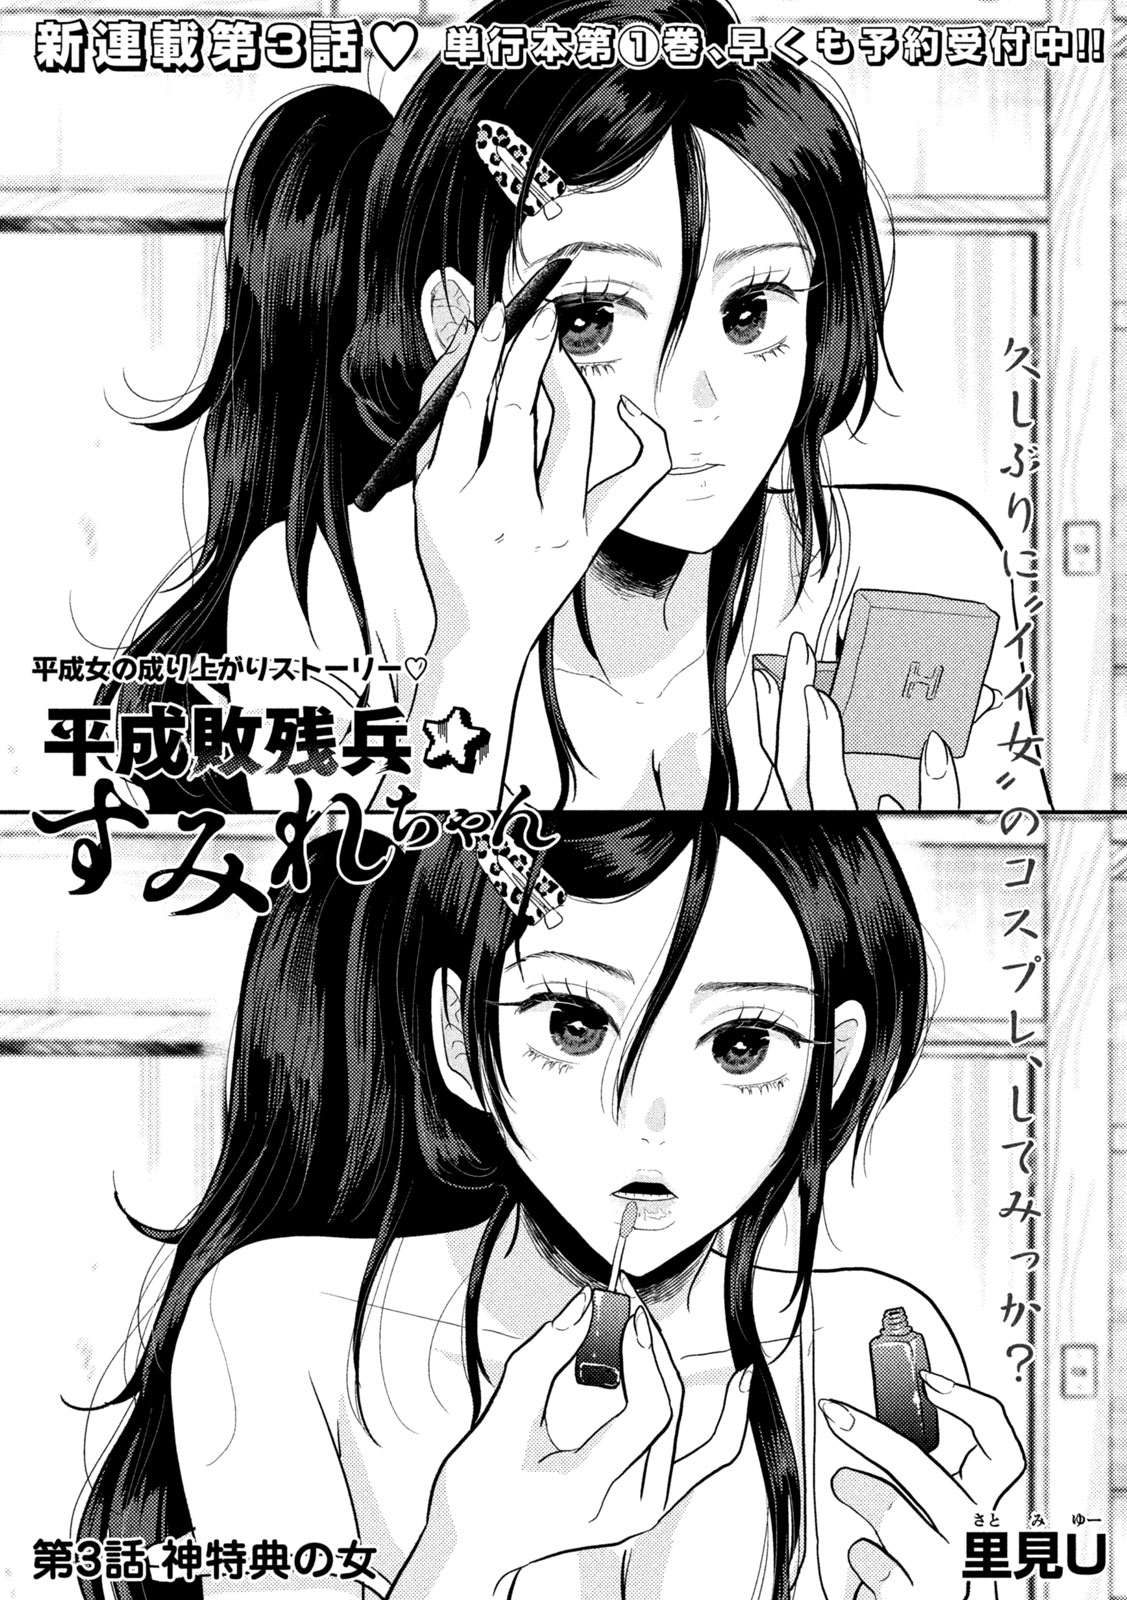 Heisei Haizanhei Sumire-chan - Chapter 3 - Page 1